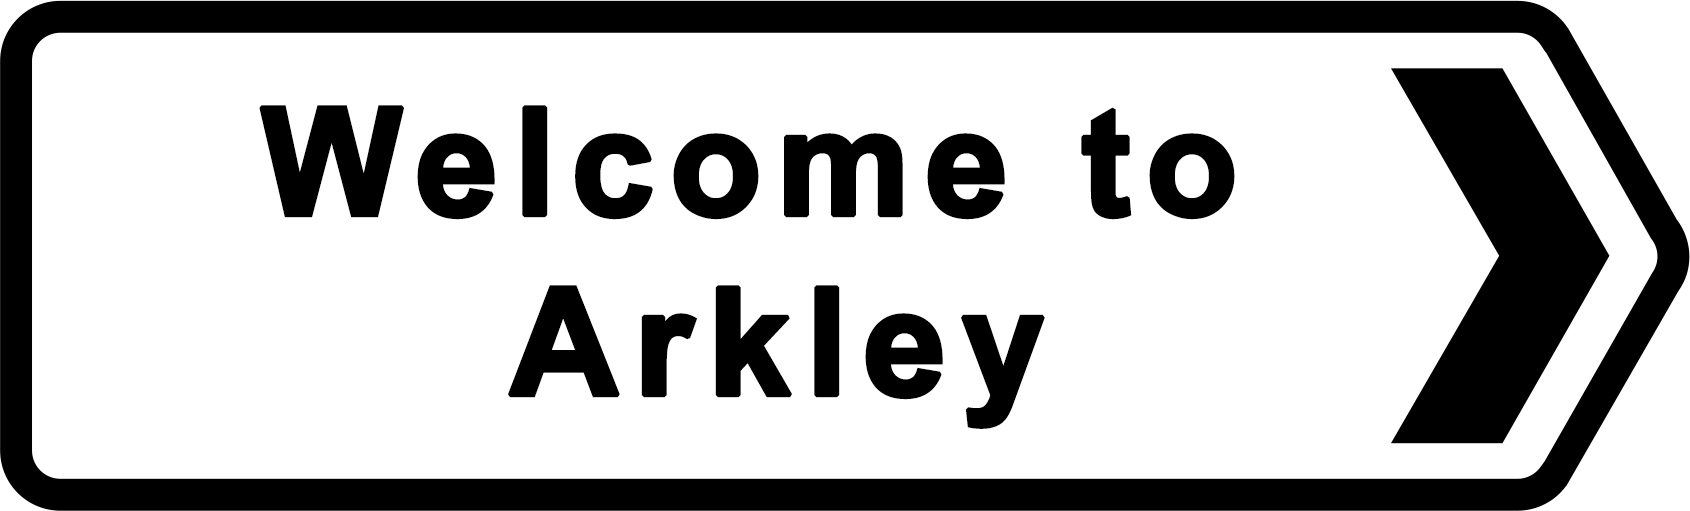 Arkley Windmill, Barnet - Cheap Driving Schools Lessons in Arkley, EN5 & NW7, London Borough of Barnet, Greater London